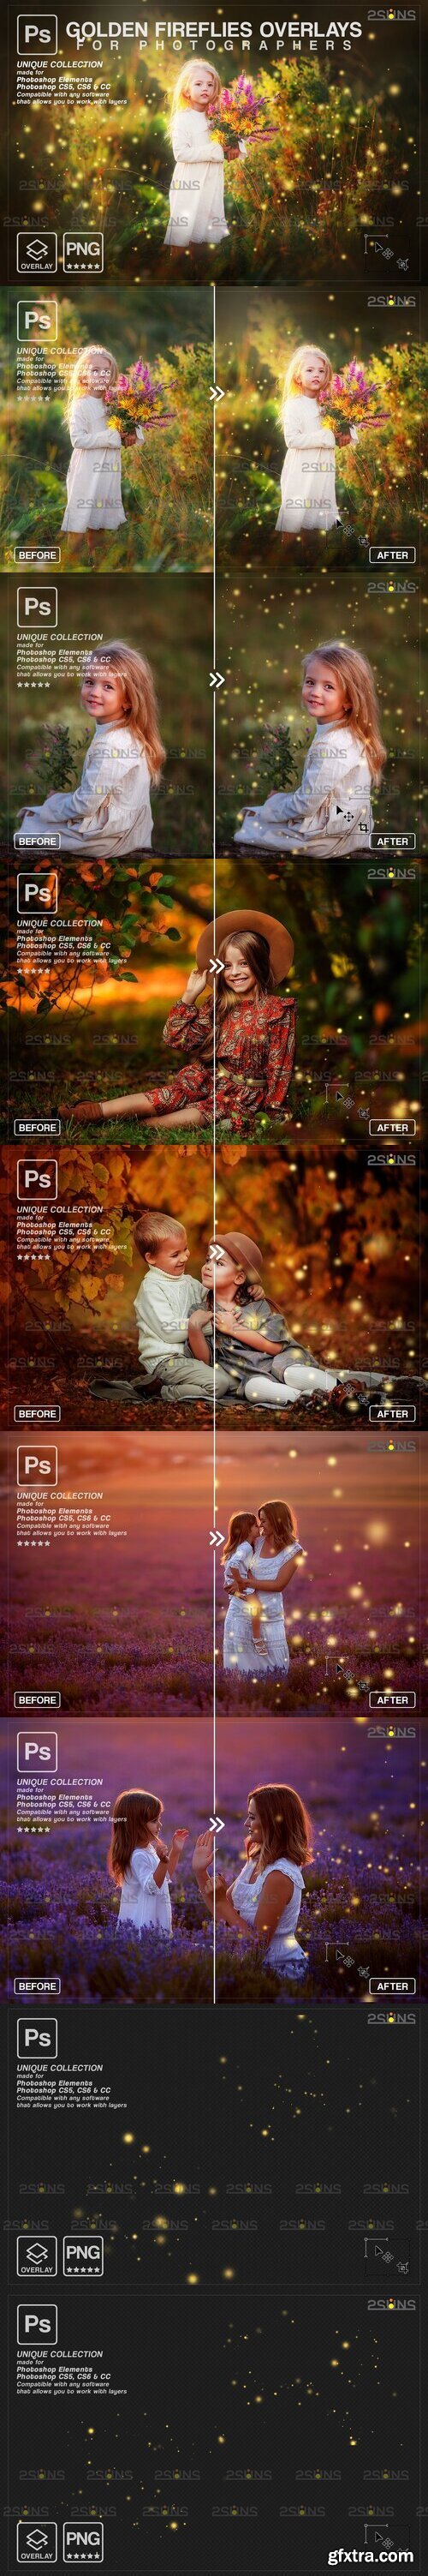 CreativeMarket - Gold Fireflies Photoshop overlay 7394481